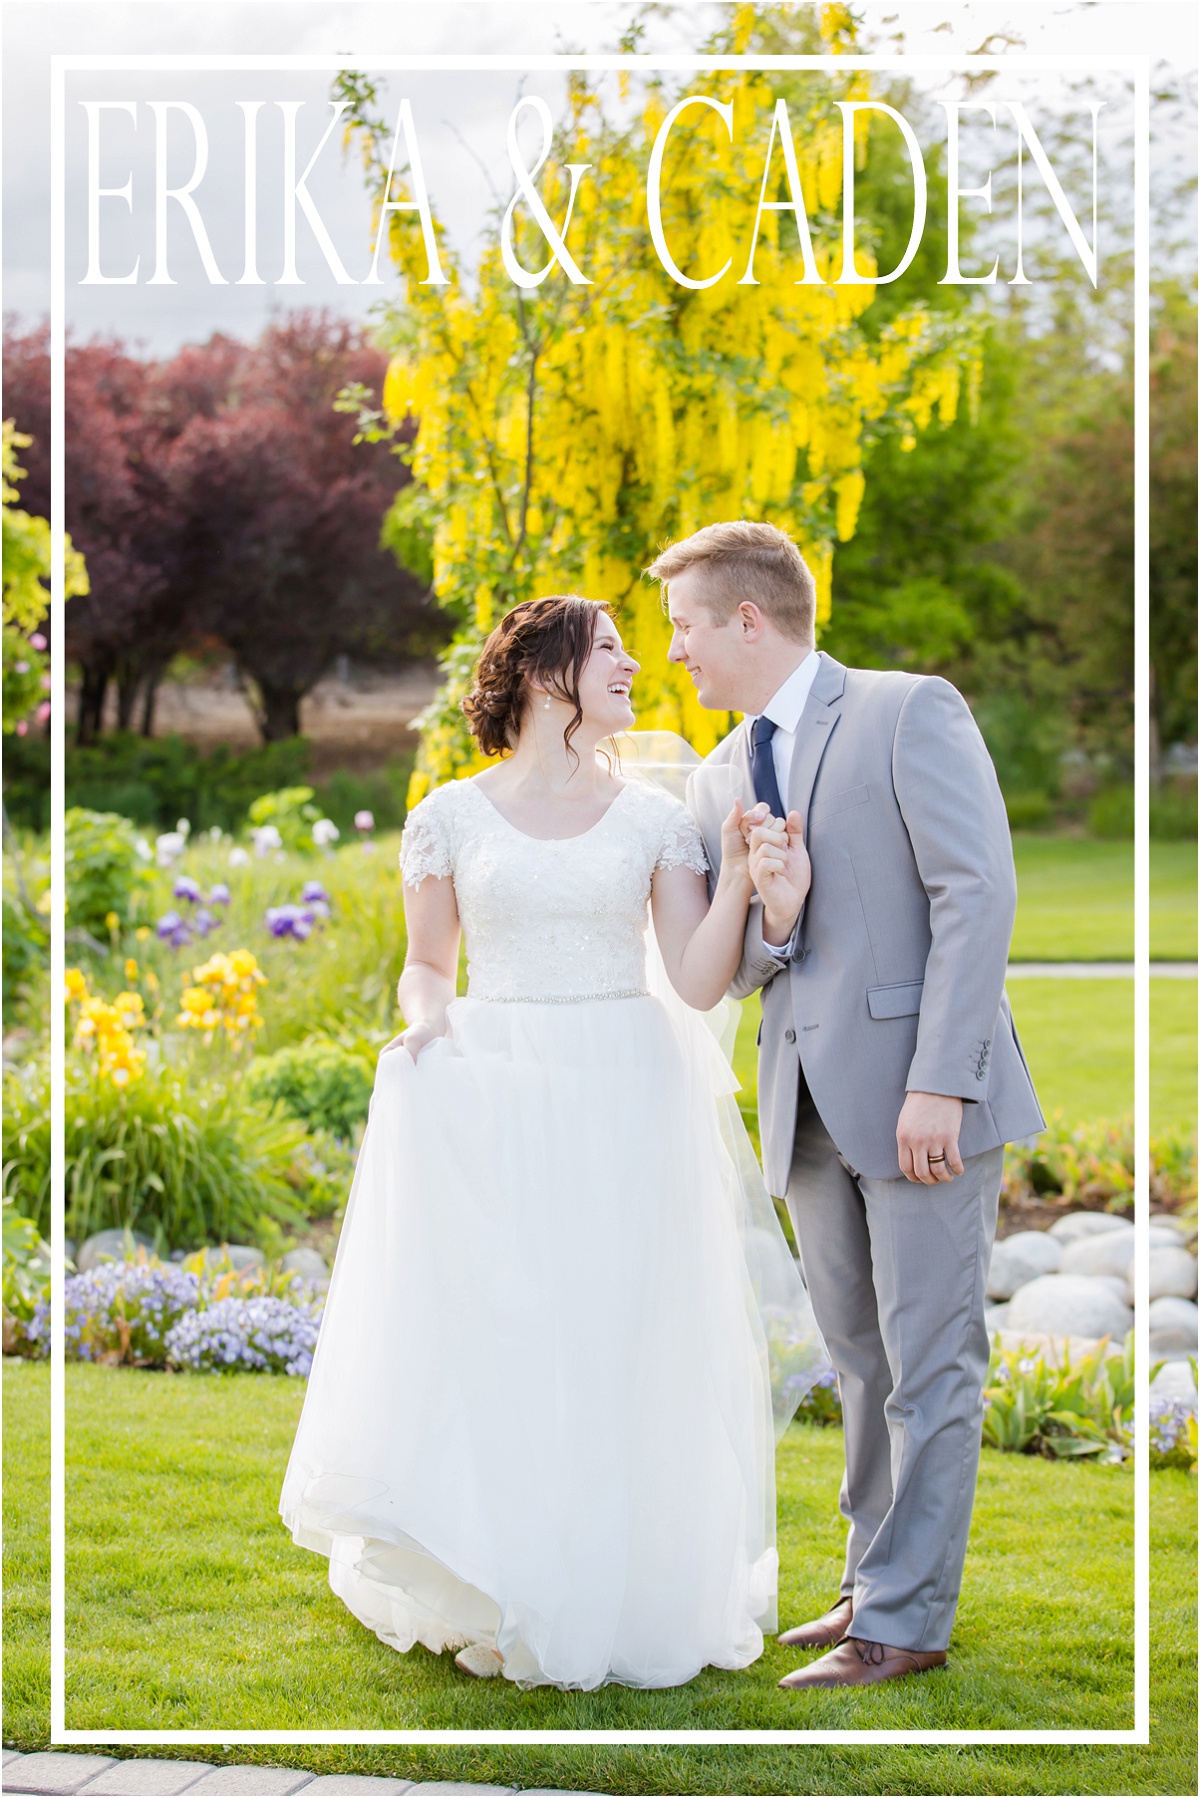 Terra Cooper Photography Weddings Brides 2015_5362.jpg